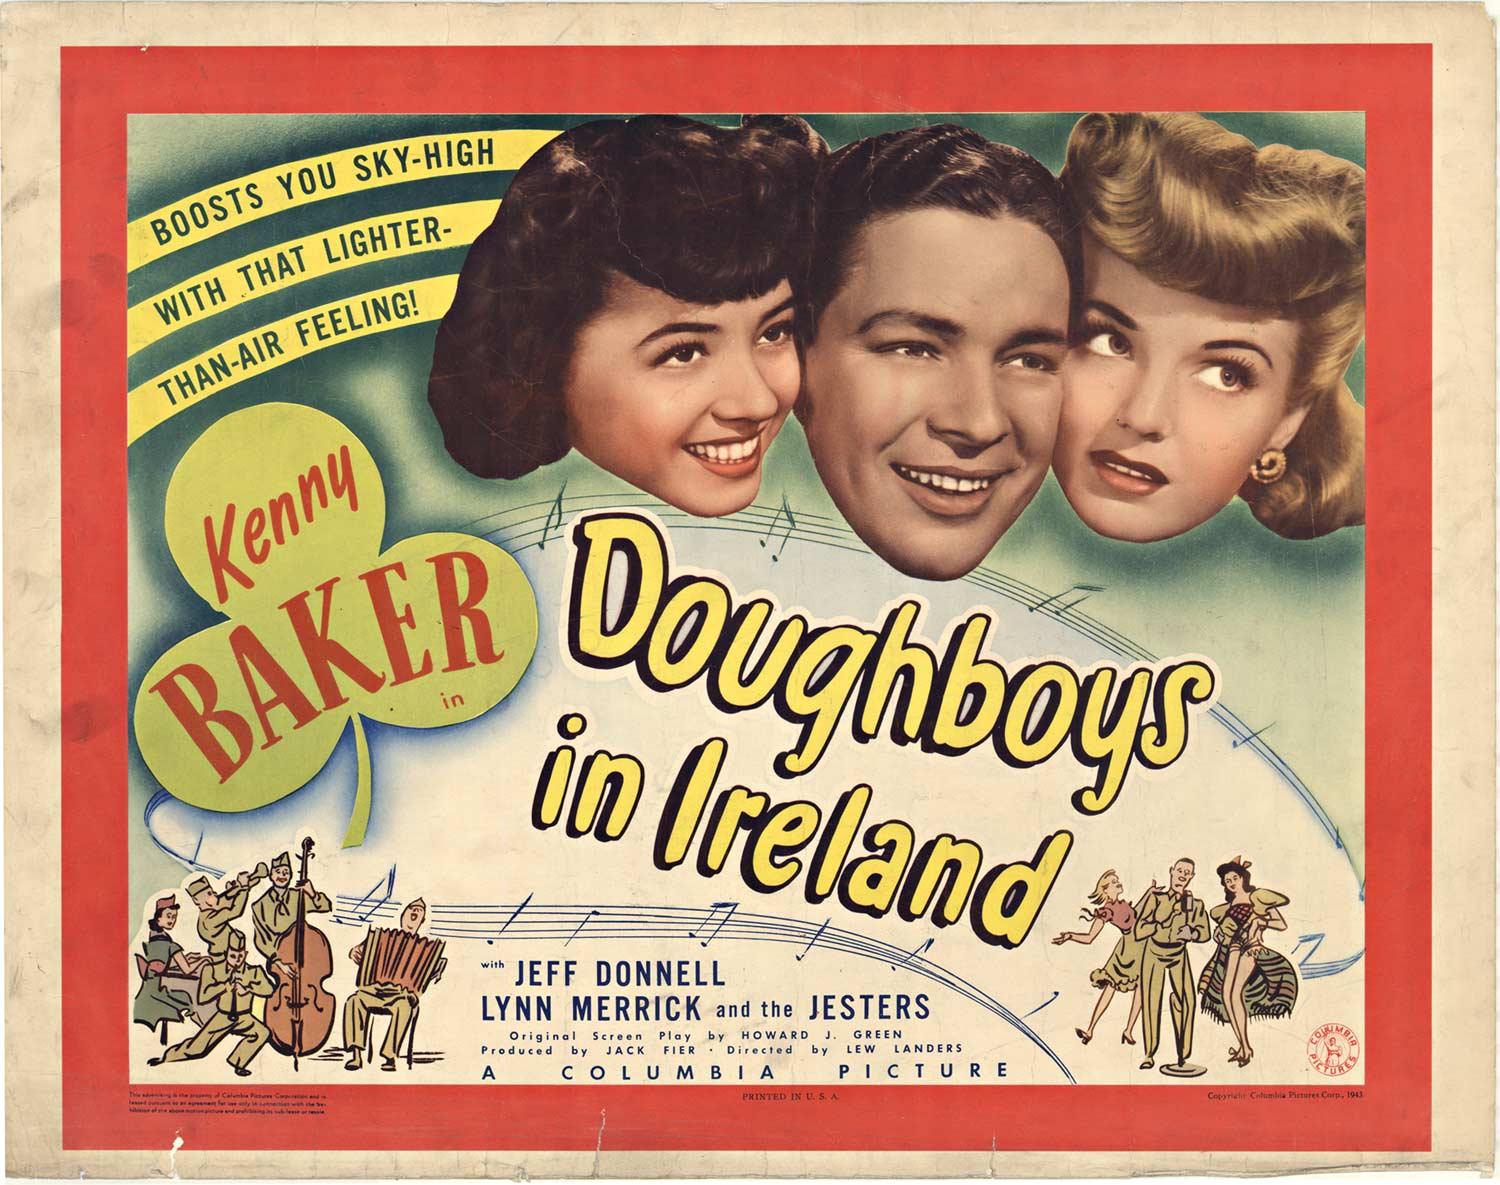 Unknown Print - Original 1943 'Doughboys in Ireland' vintage movie poster, half-sheet